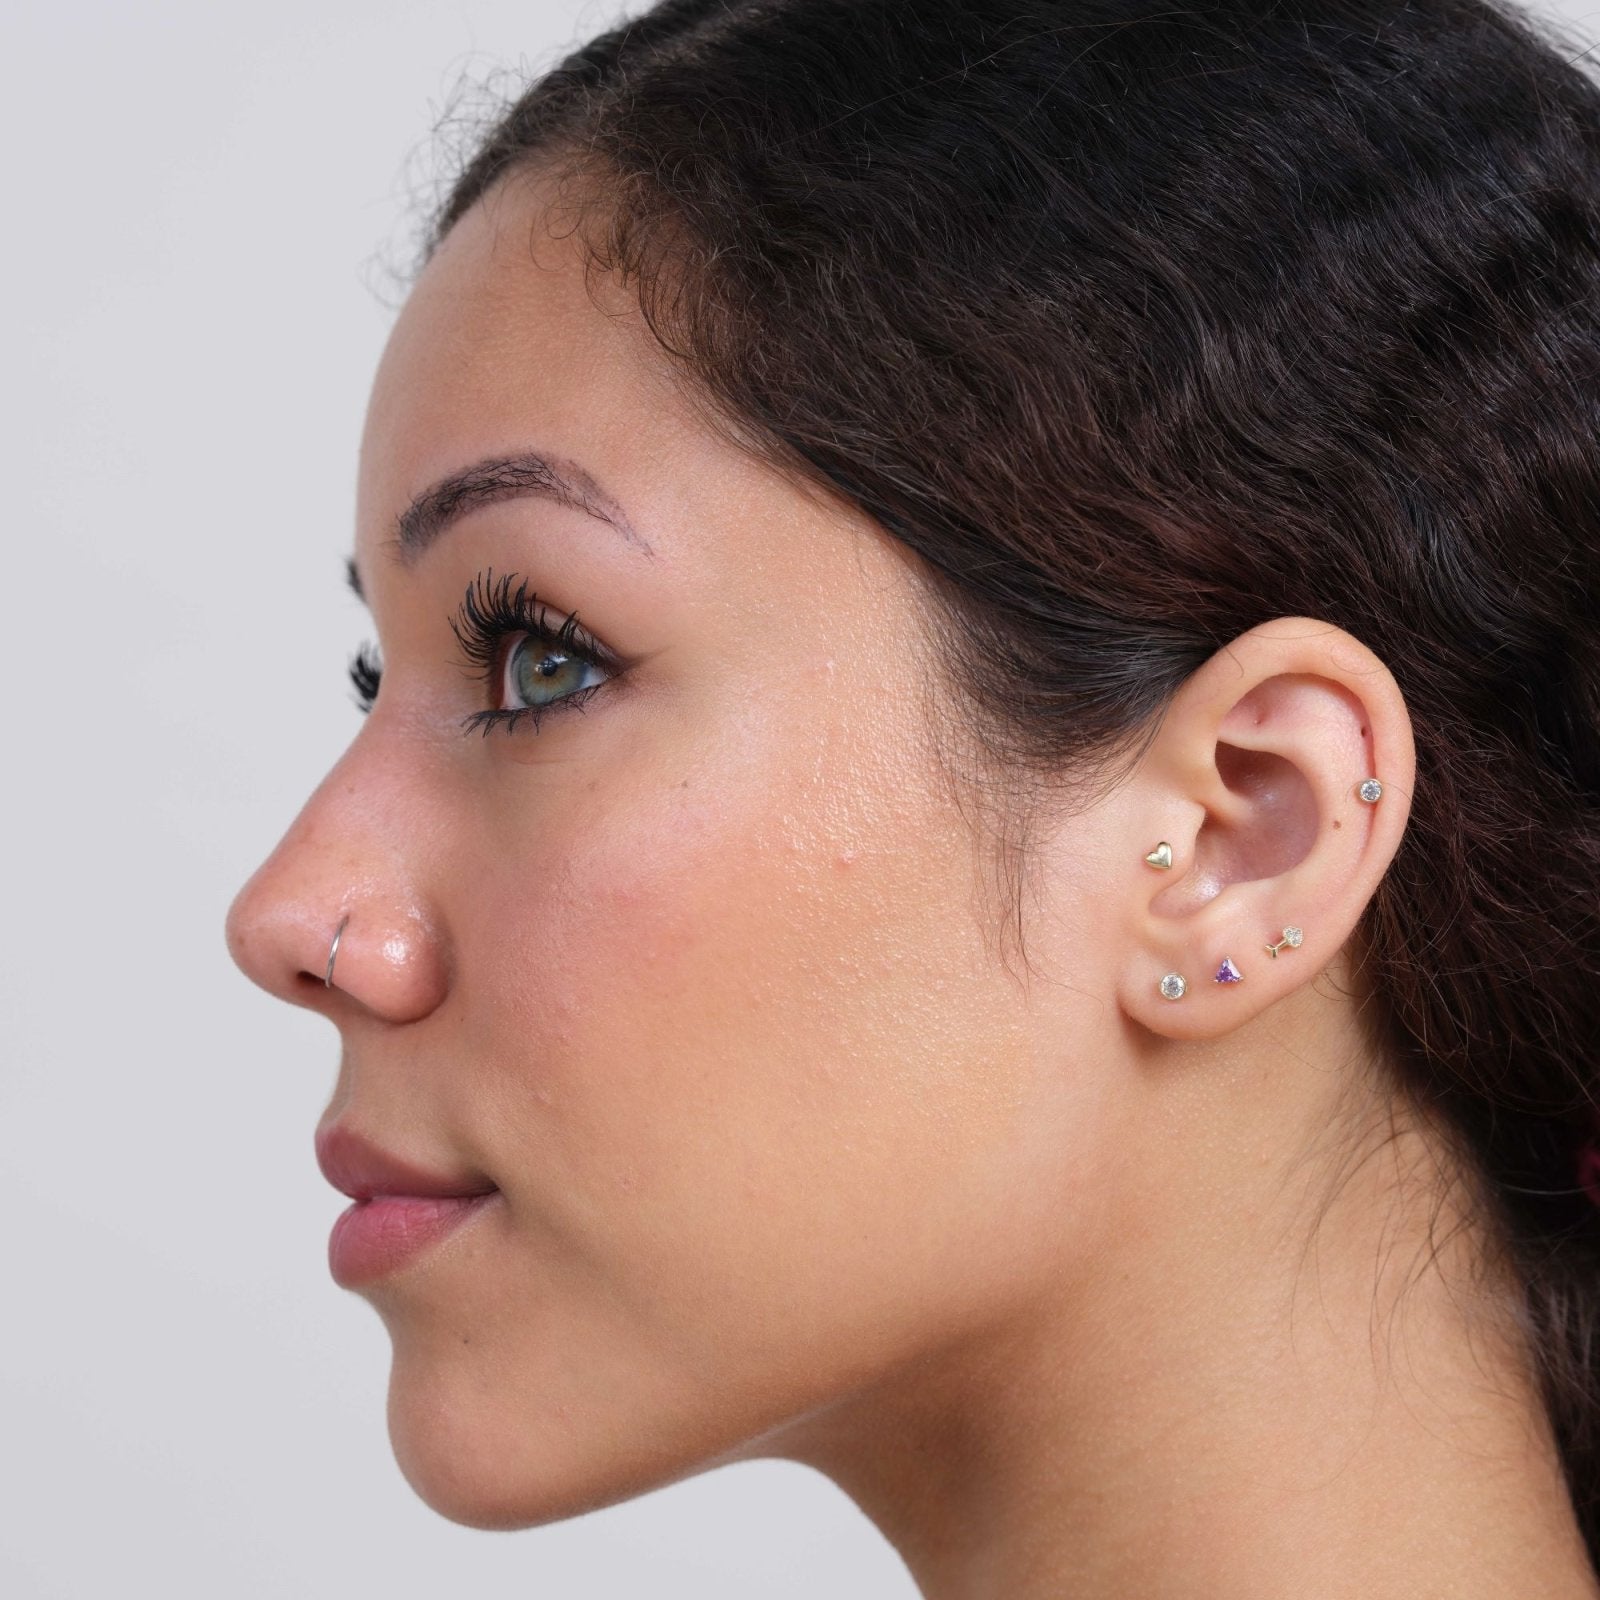 Triangle Cut Amethyst Flat Back Stud Earrings Estella Collection #product_description# 18129 14k Amethyst Birthstone #tag4# #tag5# #tag6# #tag7# #tag8# #tag9# #tag10# 5MM